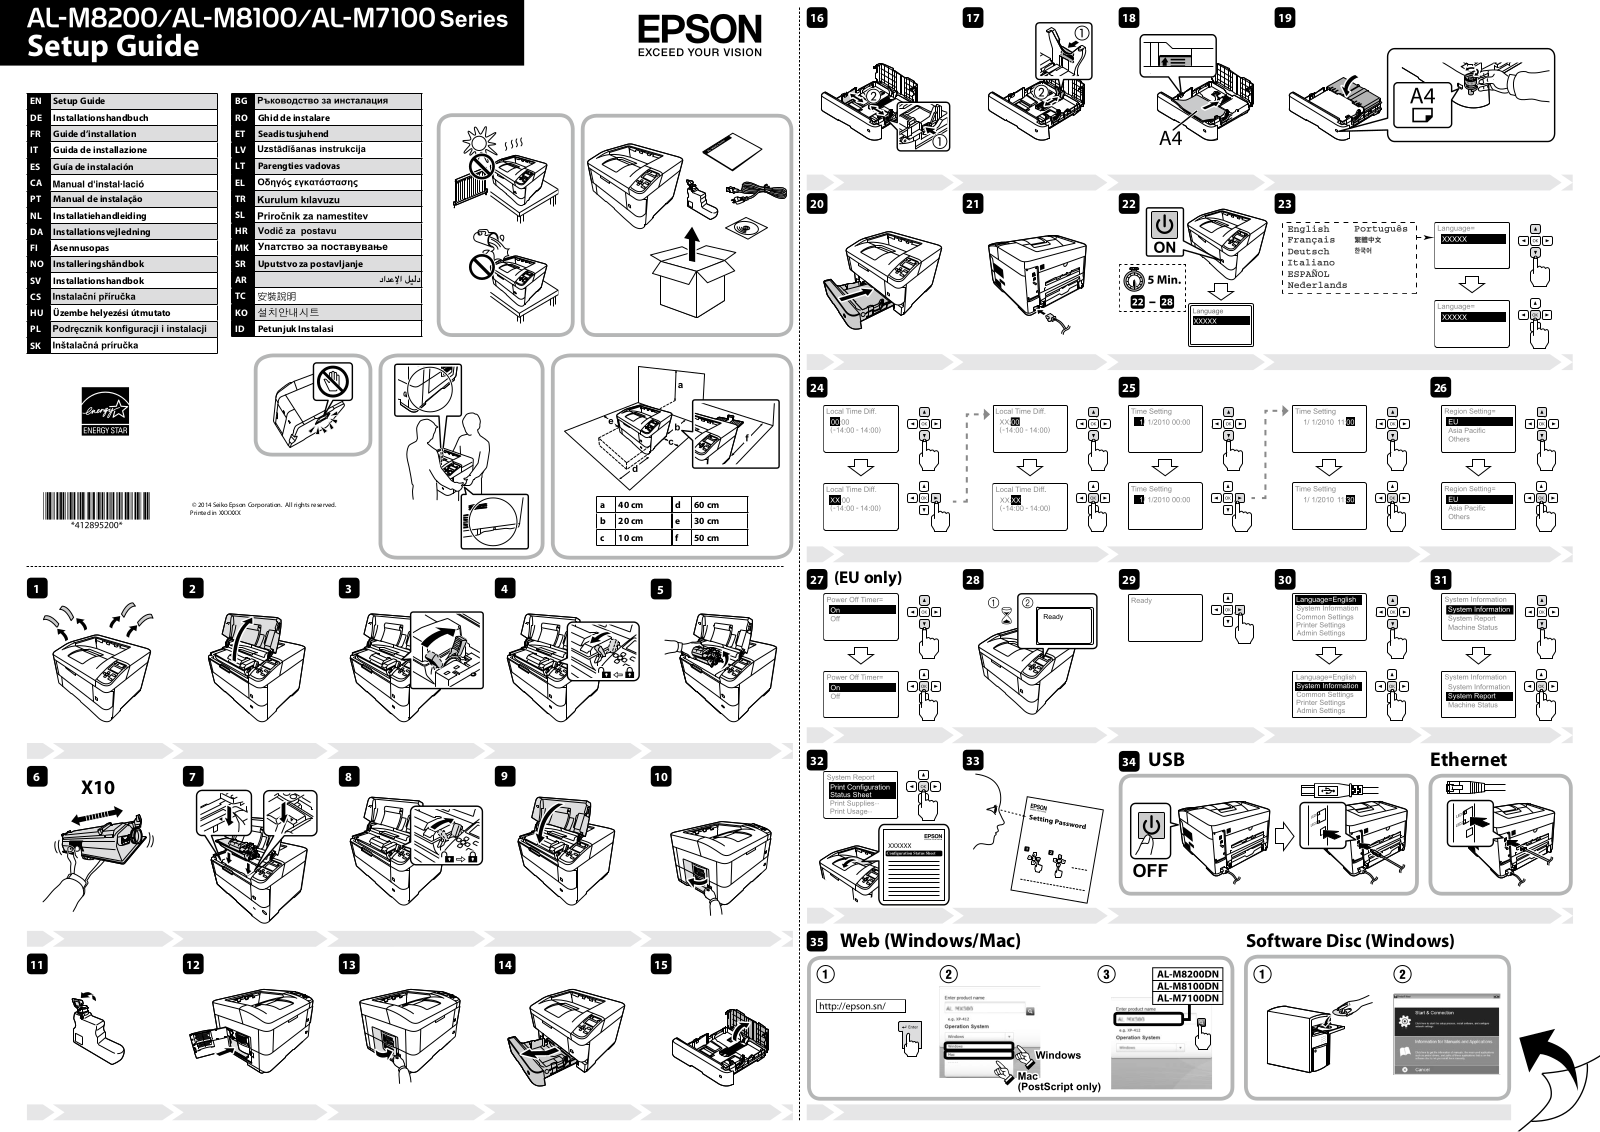 EPSON WORKFORCE AL-M8100DN User Manual